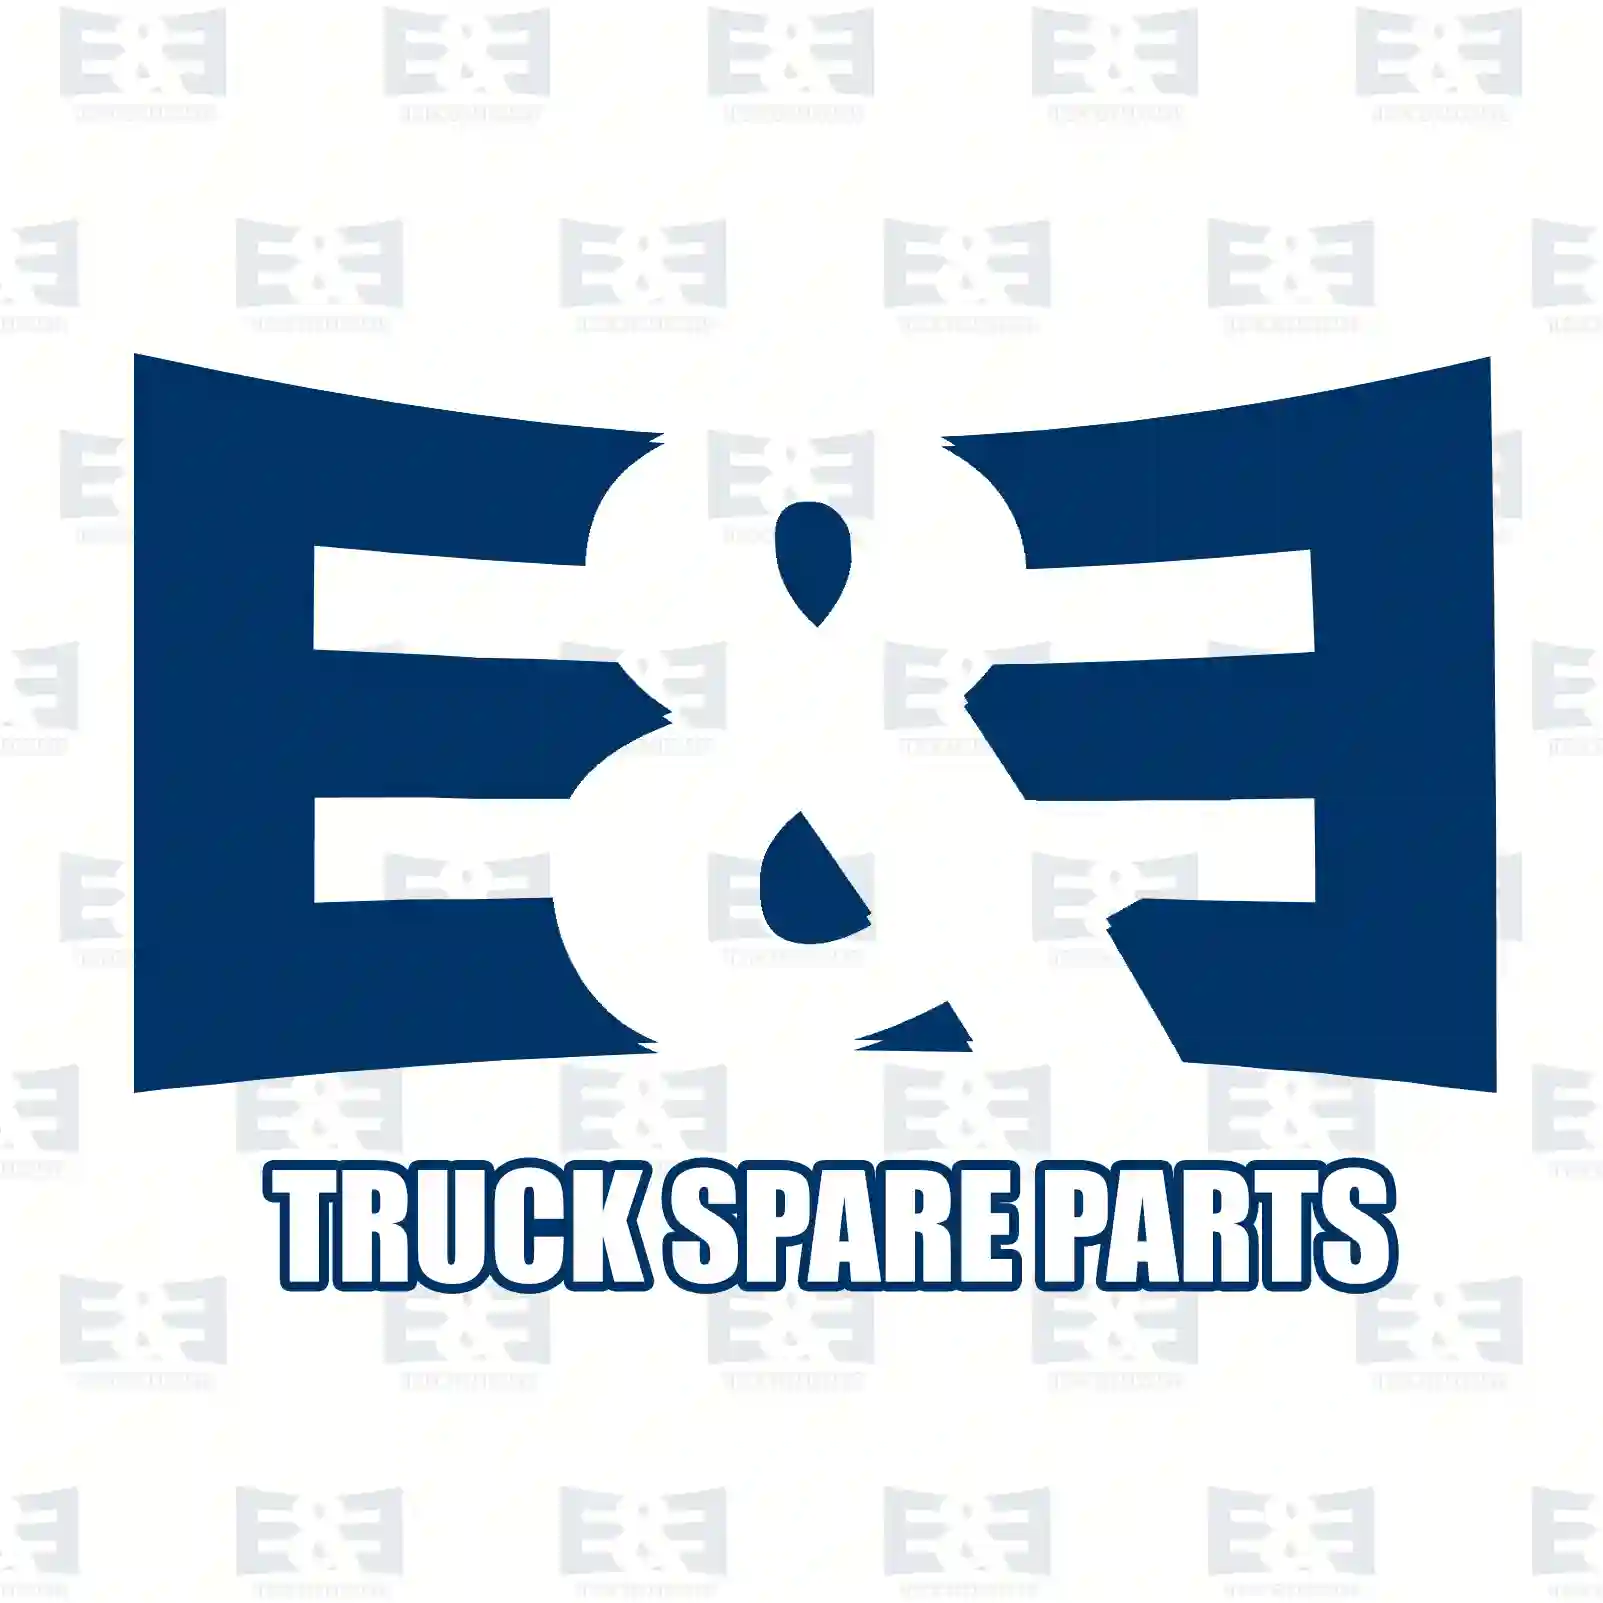 Drive Shaft Flange, EE No 2E2270667 ,  oem no:81443010189, 81443010191, 81443010198 E&E Truck Spare Parts | Truck Spare Parts, Auotomotive Spare Parts